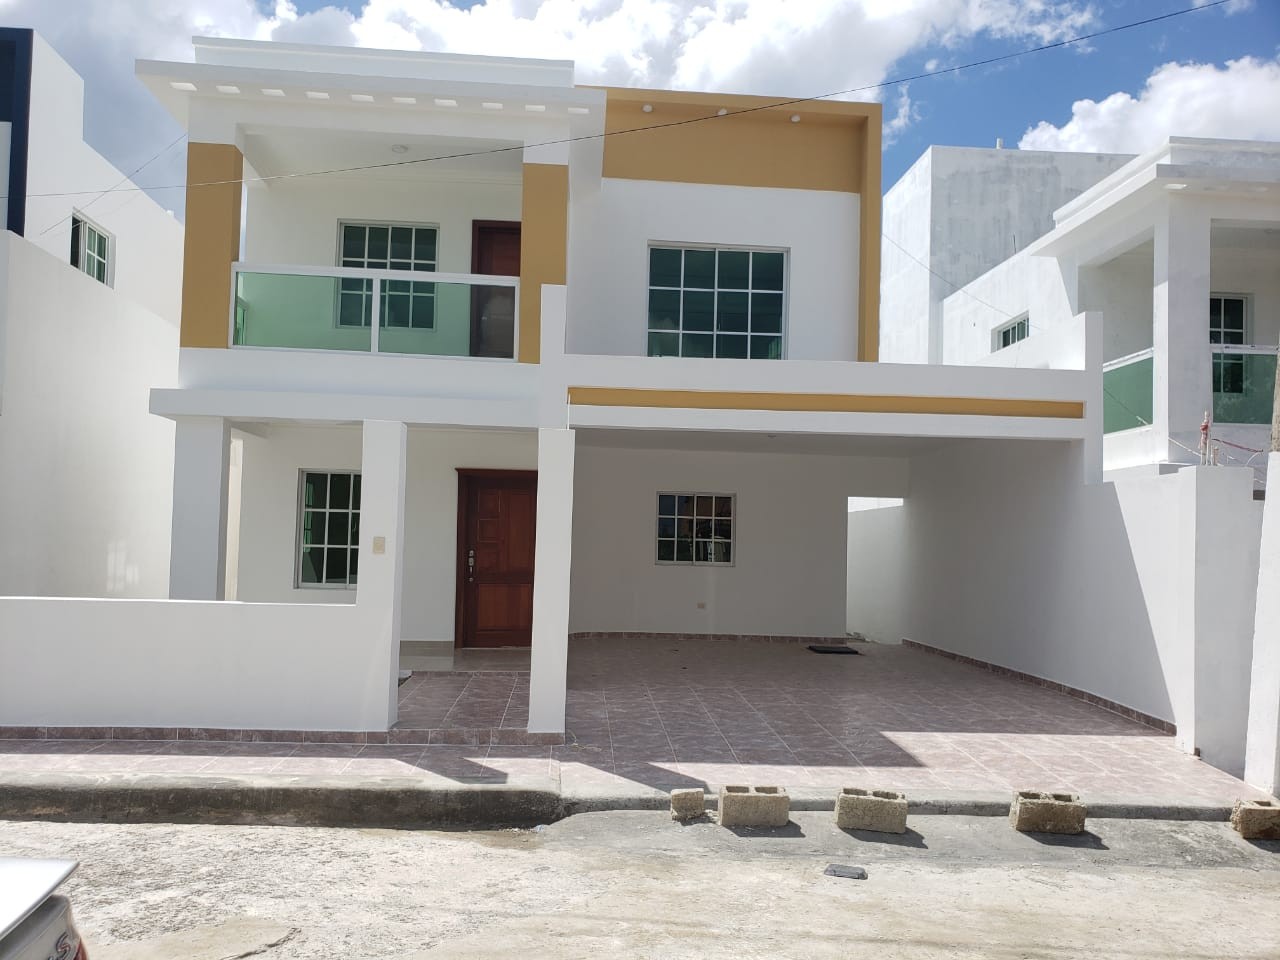 casas - Casa 2 Niveles en construcción en Santo Domingo este, autopista de San Isidro